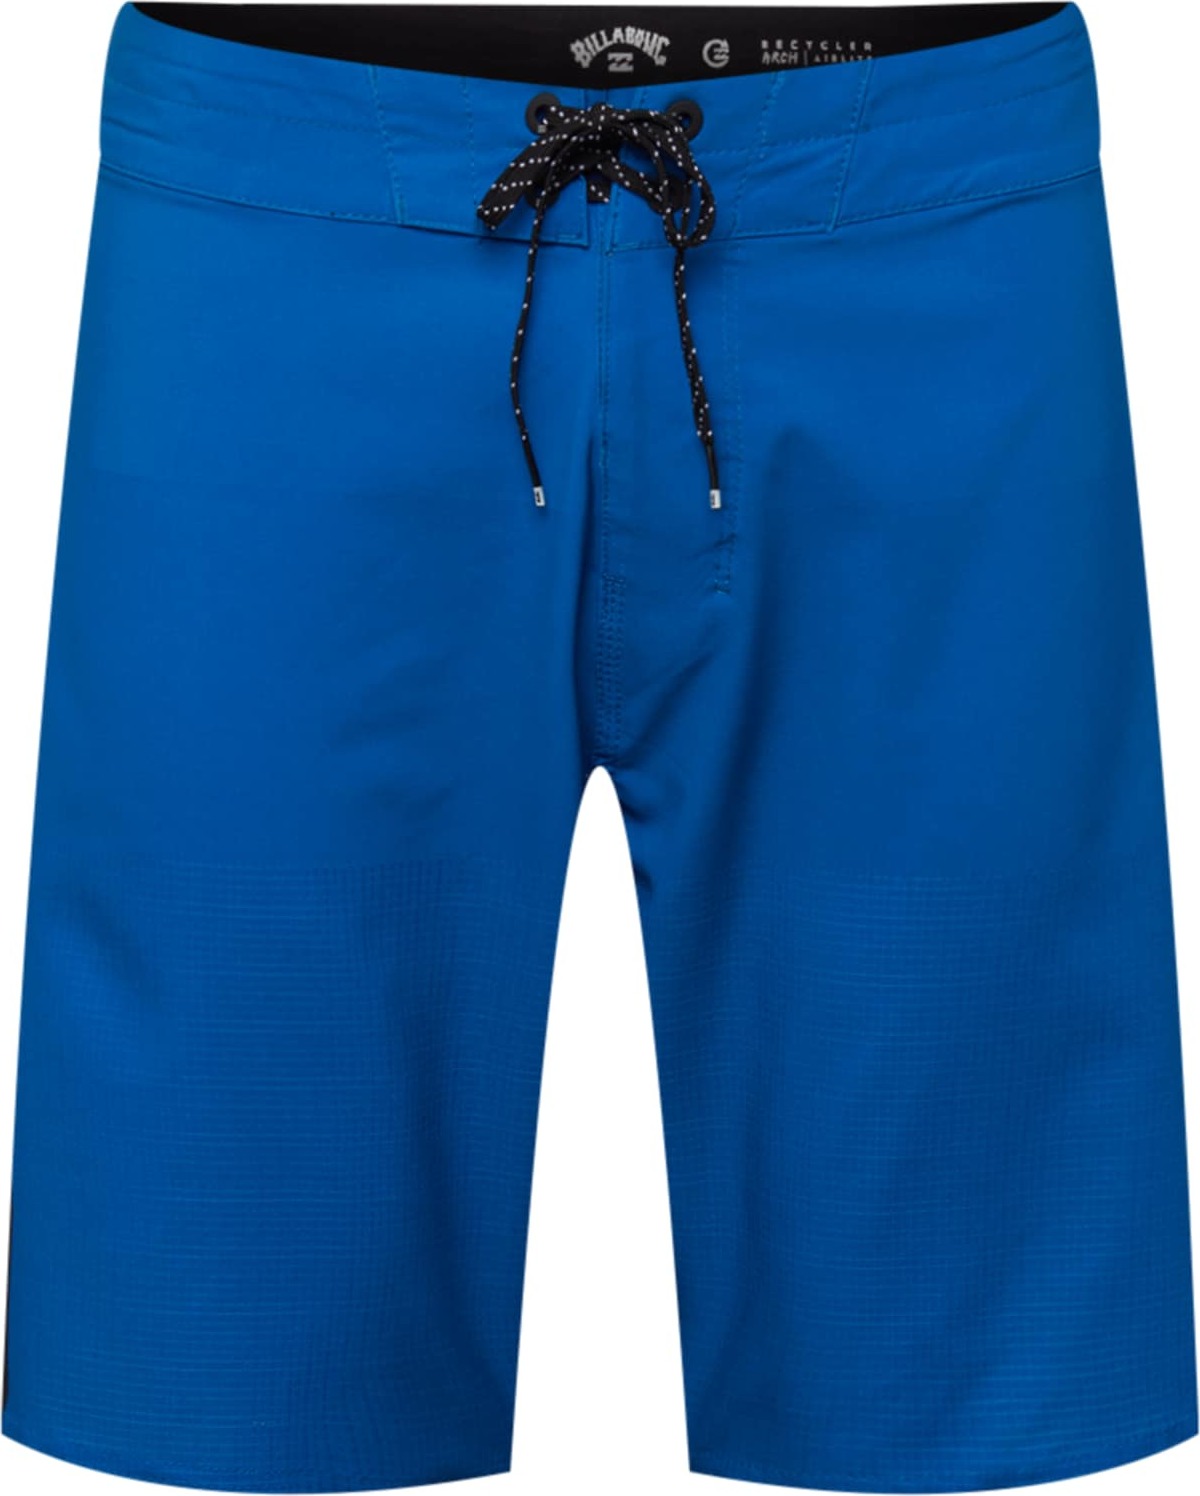 BILLABONG Plavecké šortky 'Arch Airlite' kobaltová modř / korálová / černá / bílá